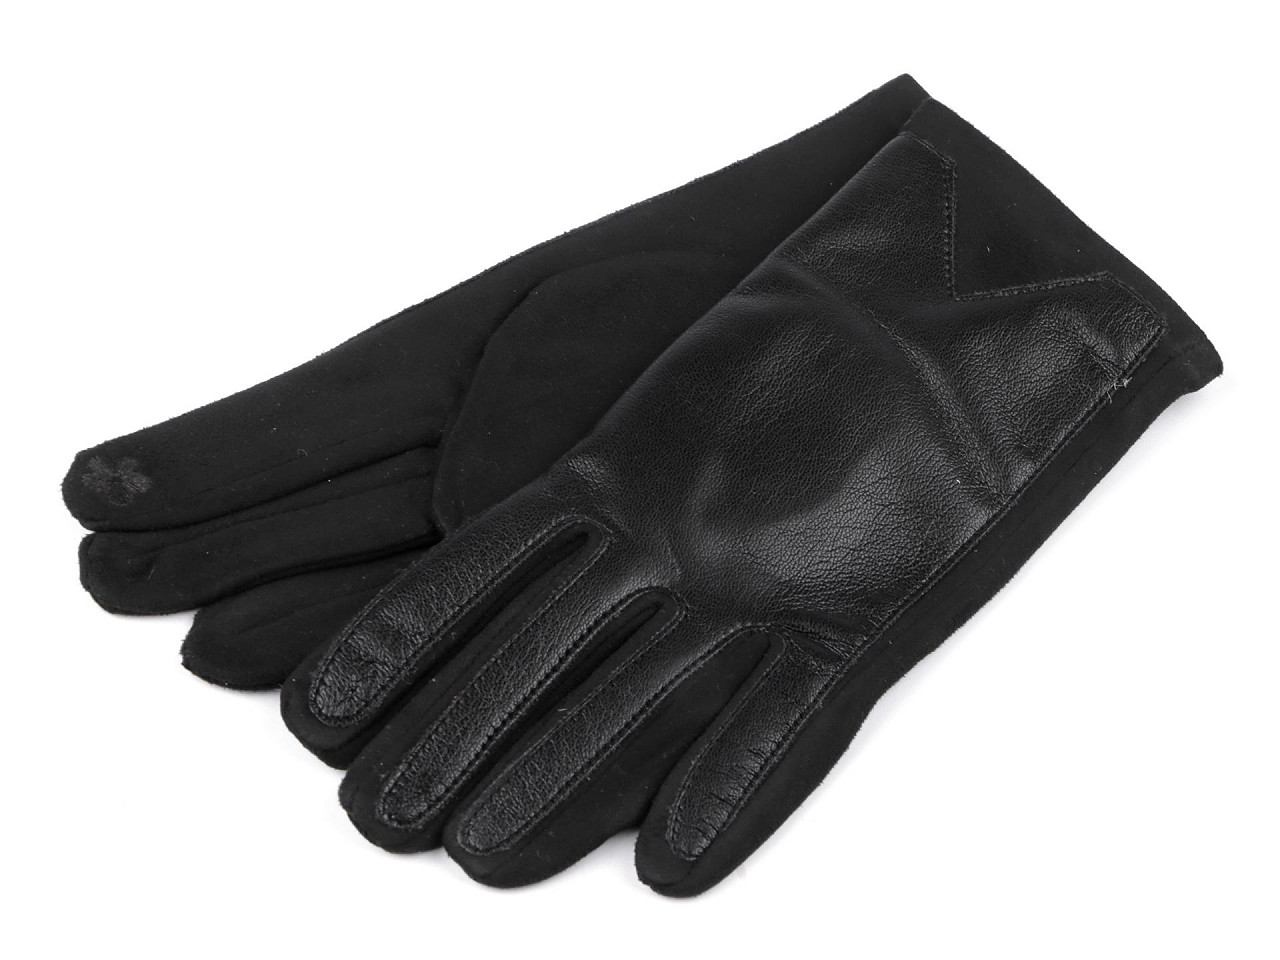 Damenhandschuhe mit Kunstlederbesatz, Touchscreen-fähig, schwarz, 1 Paar